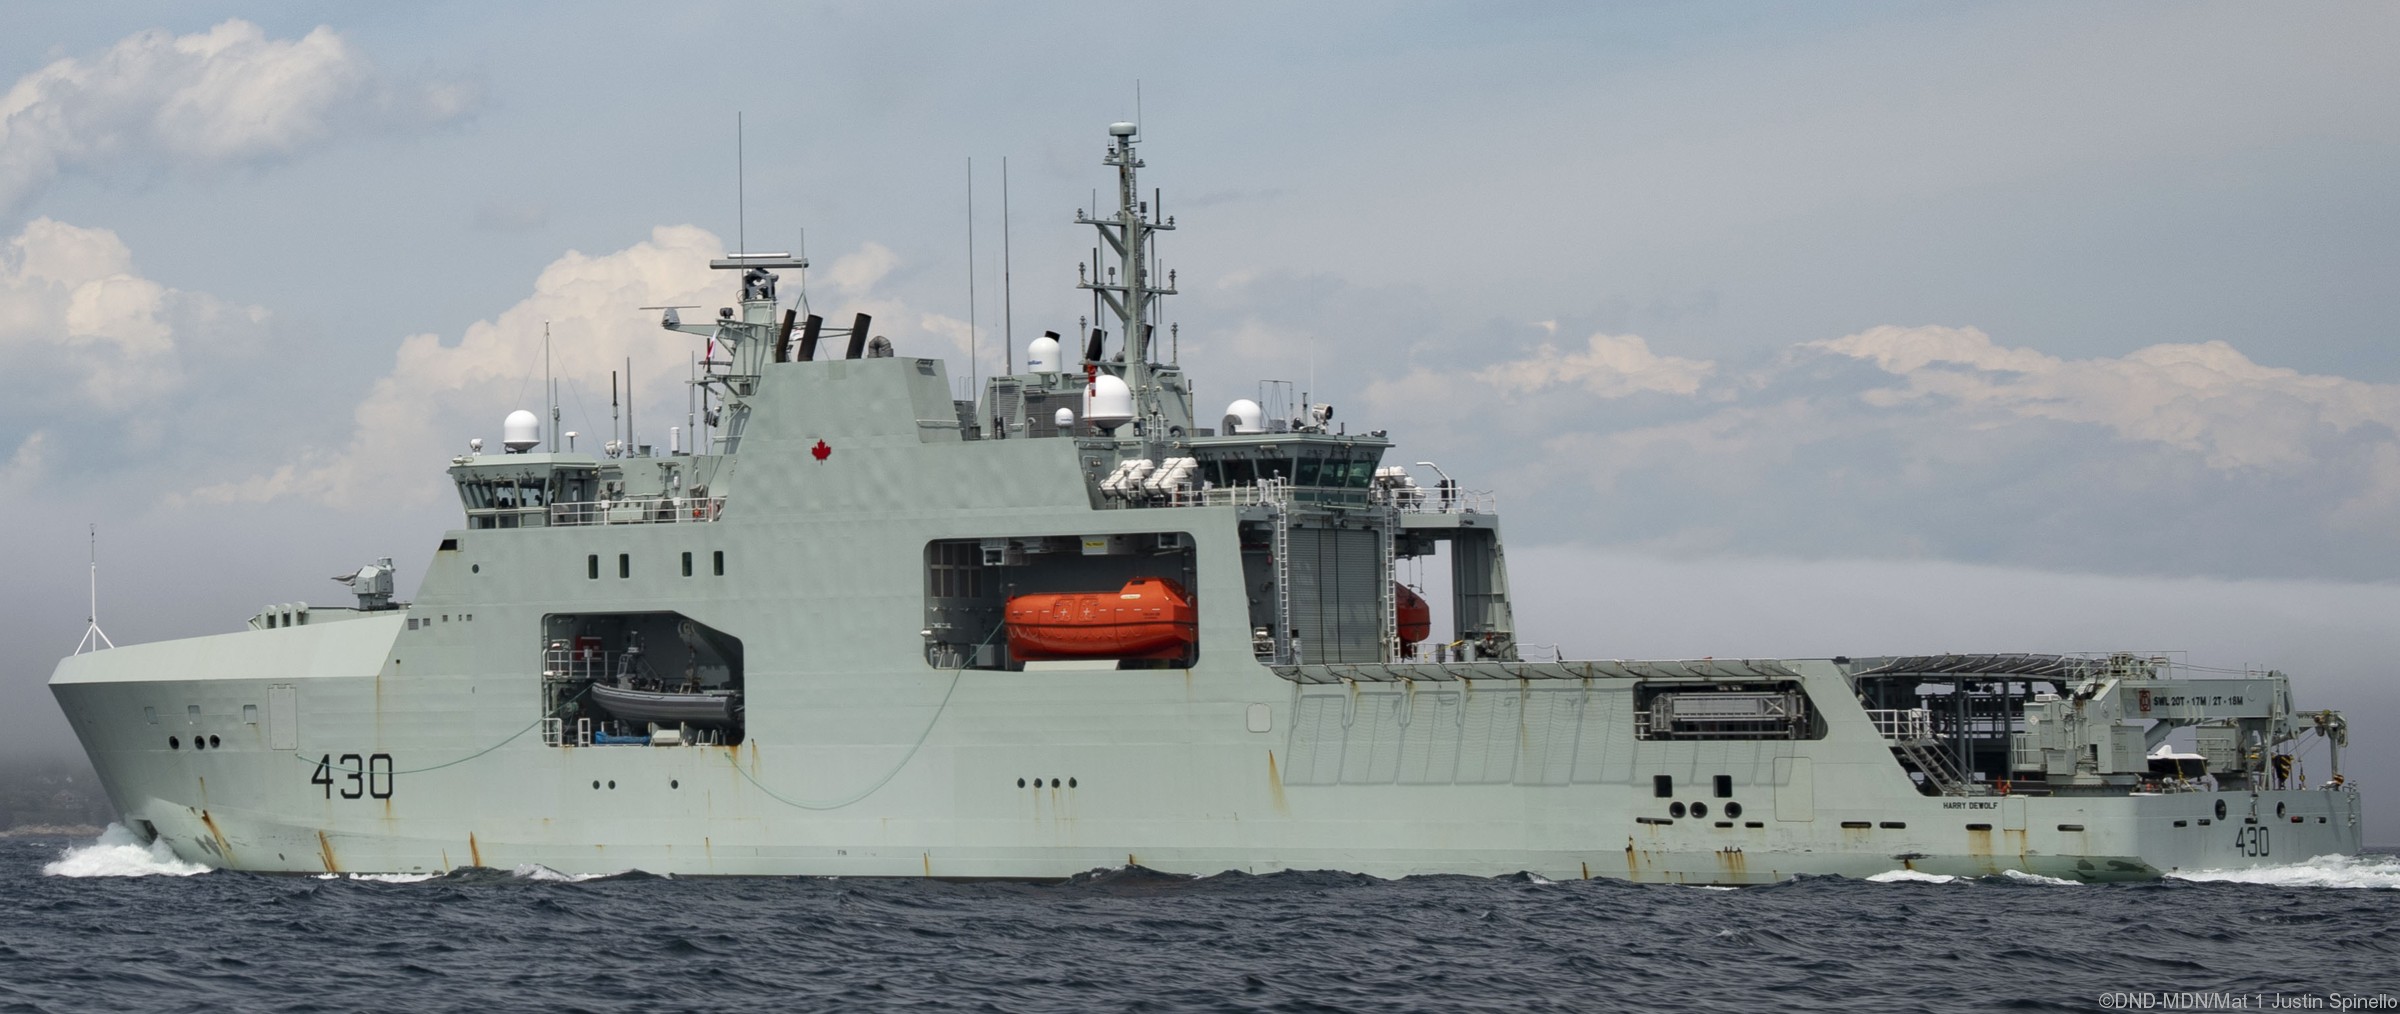 aopv-430 hmcs harry dewolf arctic offshore patrol vessel ncsm royal canadian navy 05